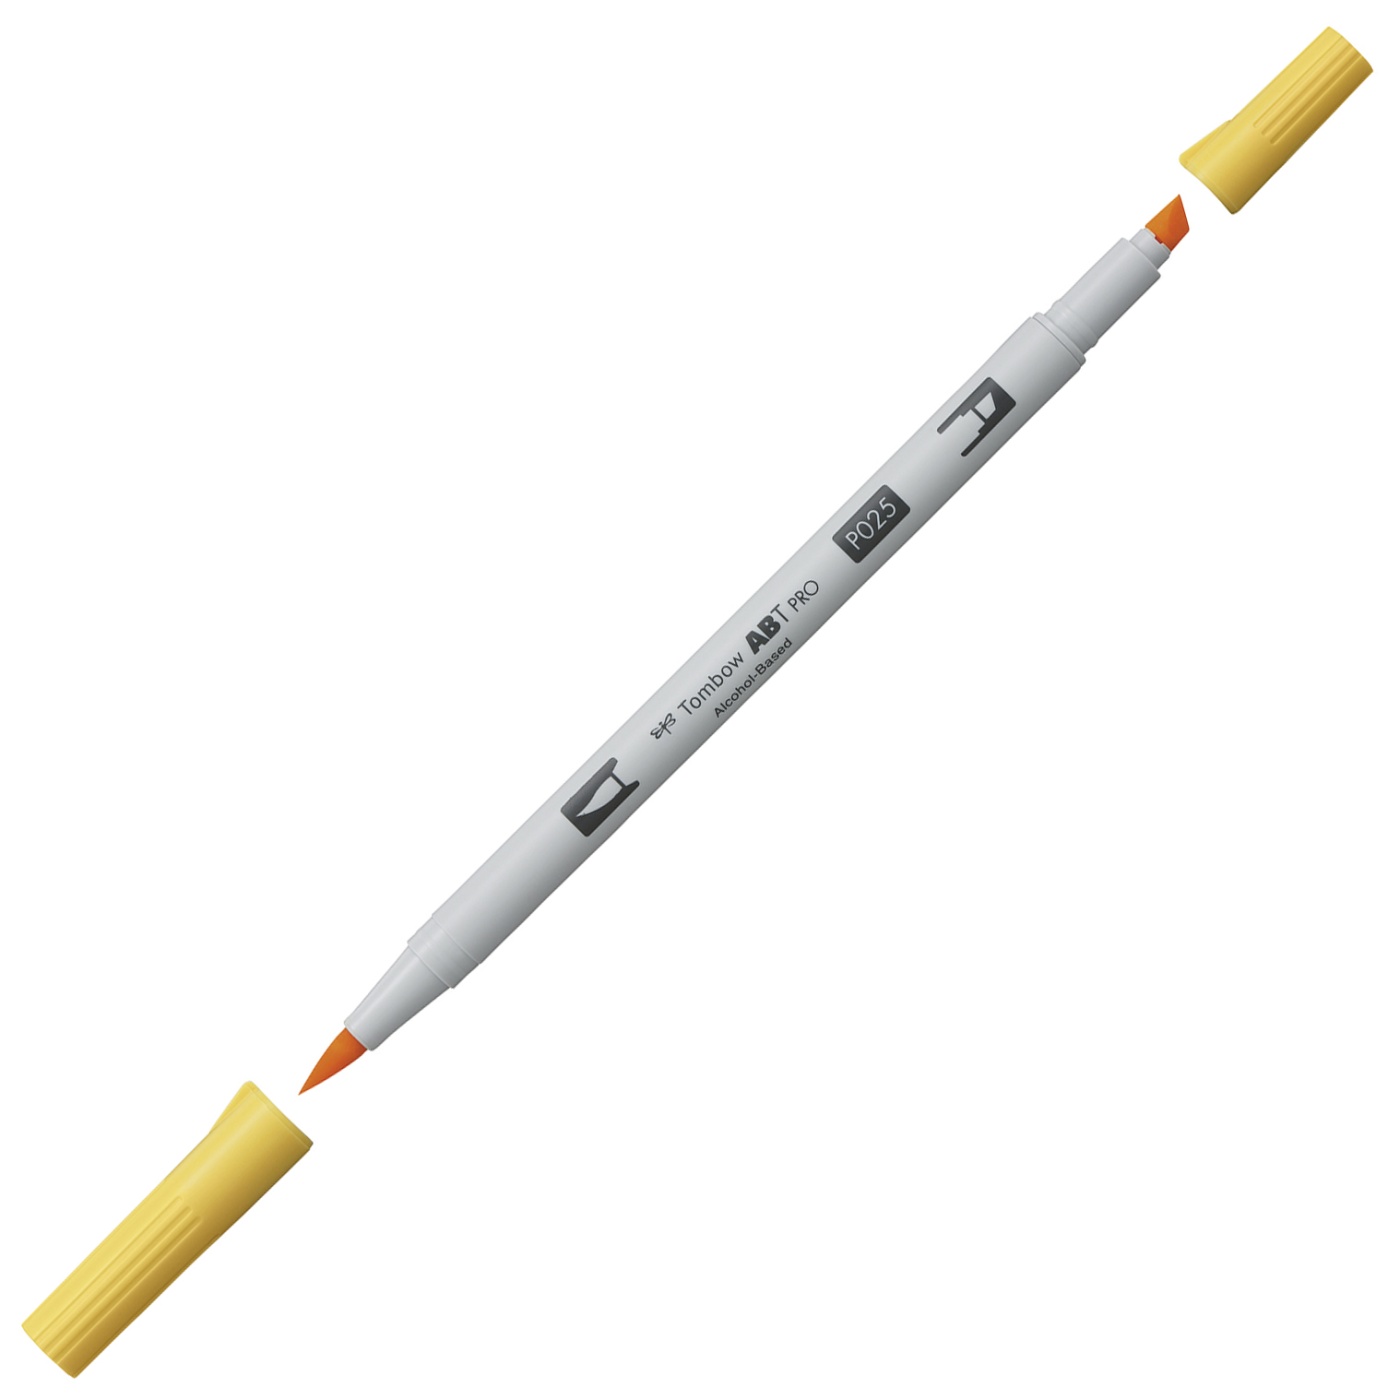 ABT PRO Dual Brush Pen 5-set Warm Grey i gruppen Pennor / Produktserier / ABT Dual Brush hos Pen Store (101258)